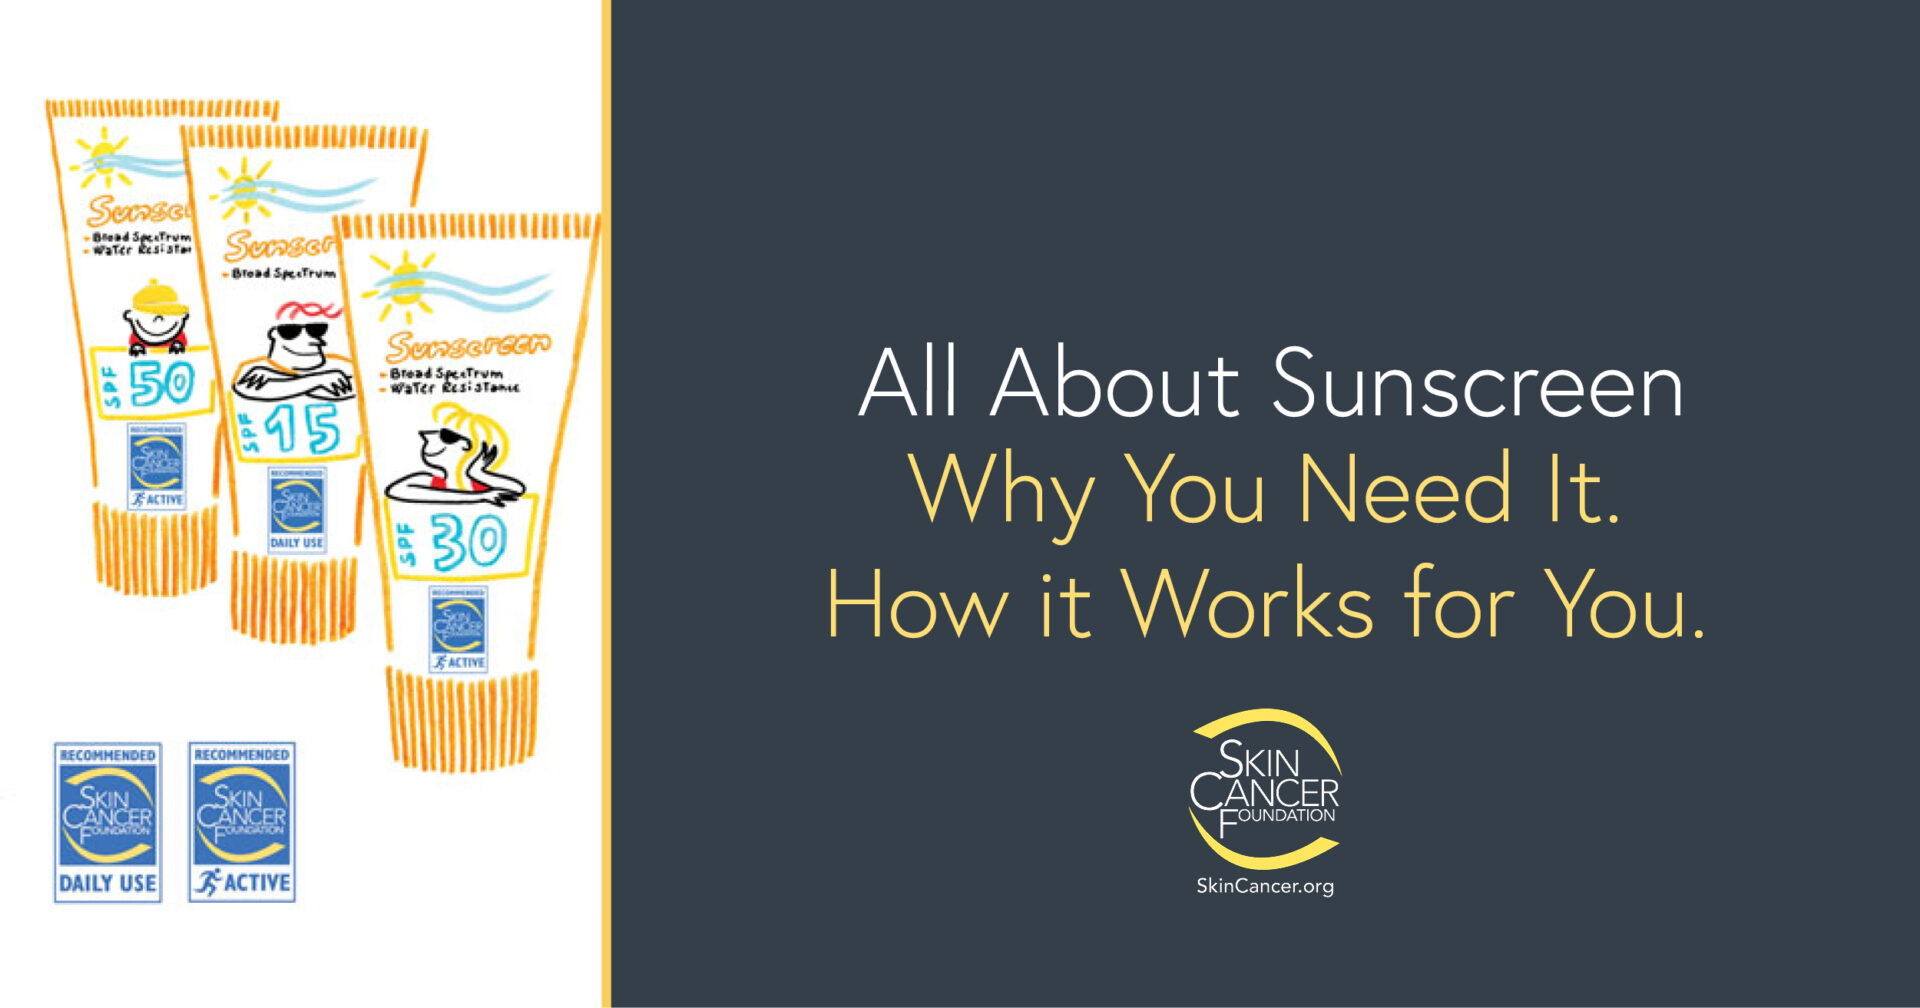 Sunscreen - The Skin Cancer Foundation